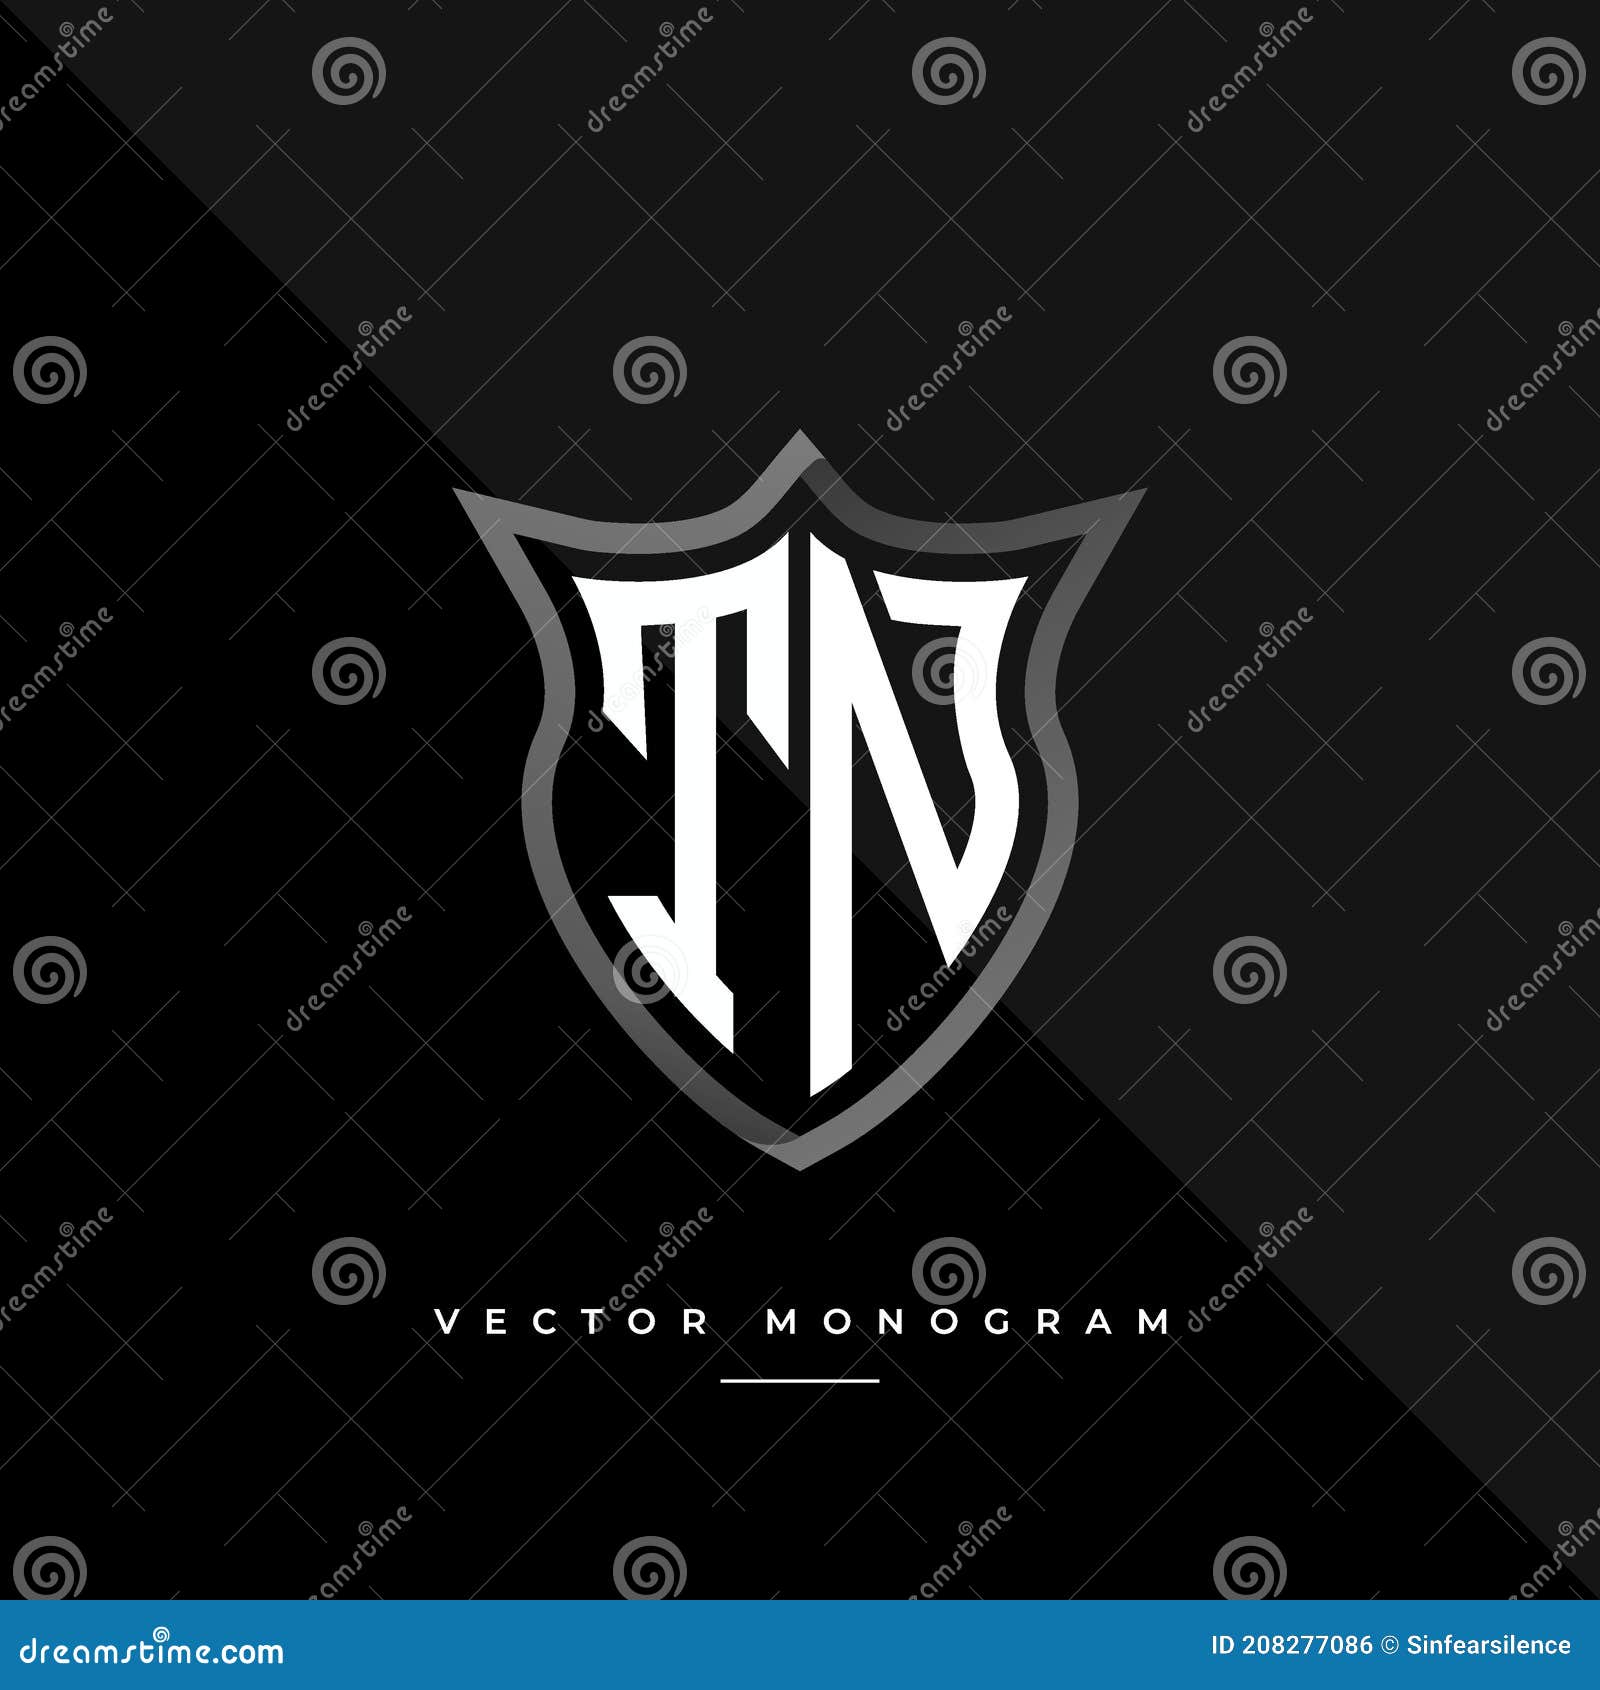 Logo Design Contest for TN | Hatchwise